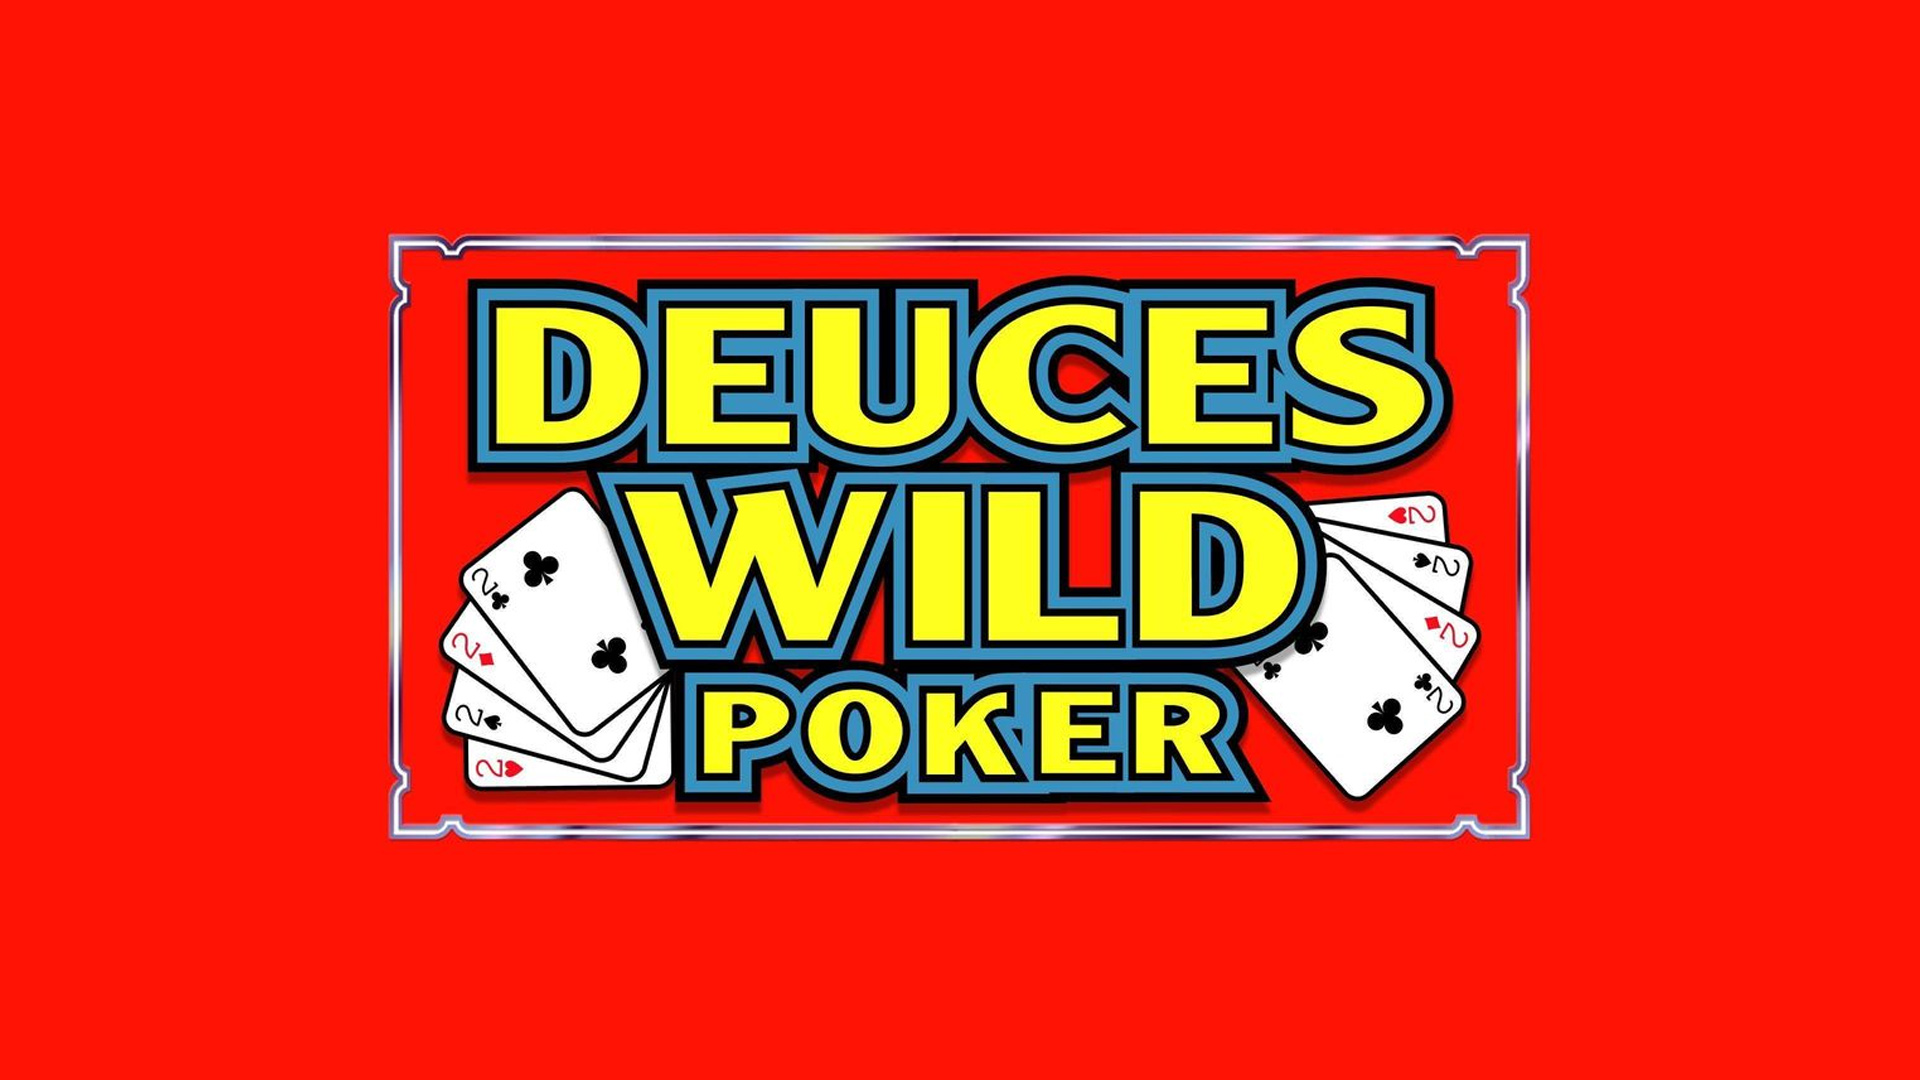 Deuces-Wild-Video-Poker-belly-glass-design_q085_1920x1080